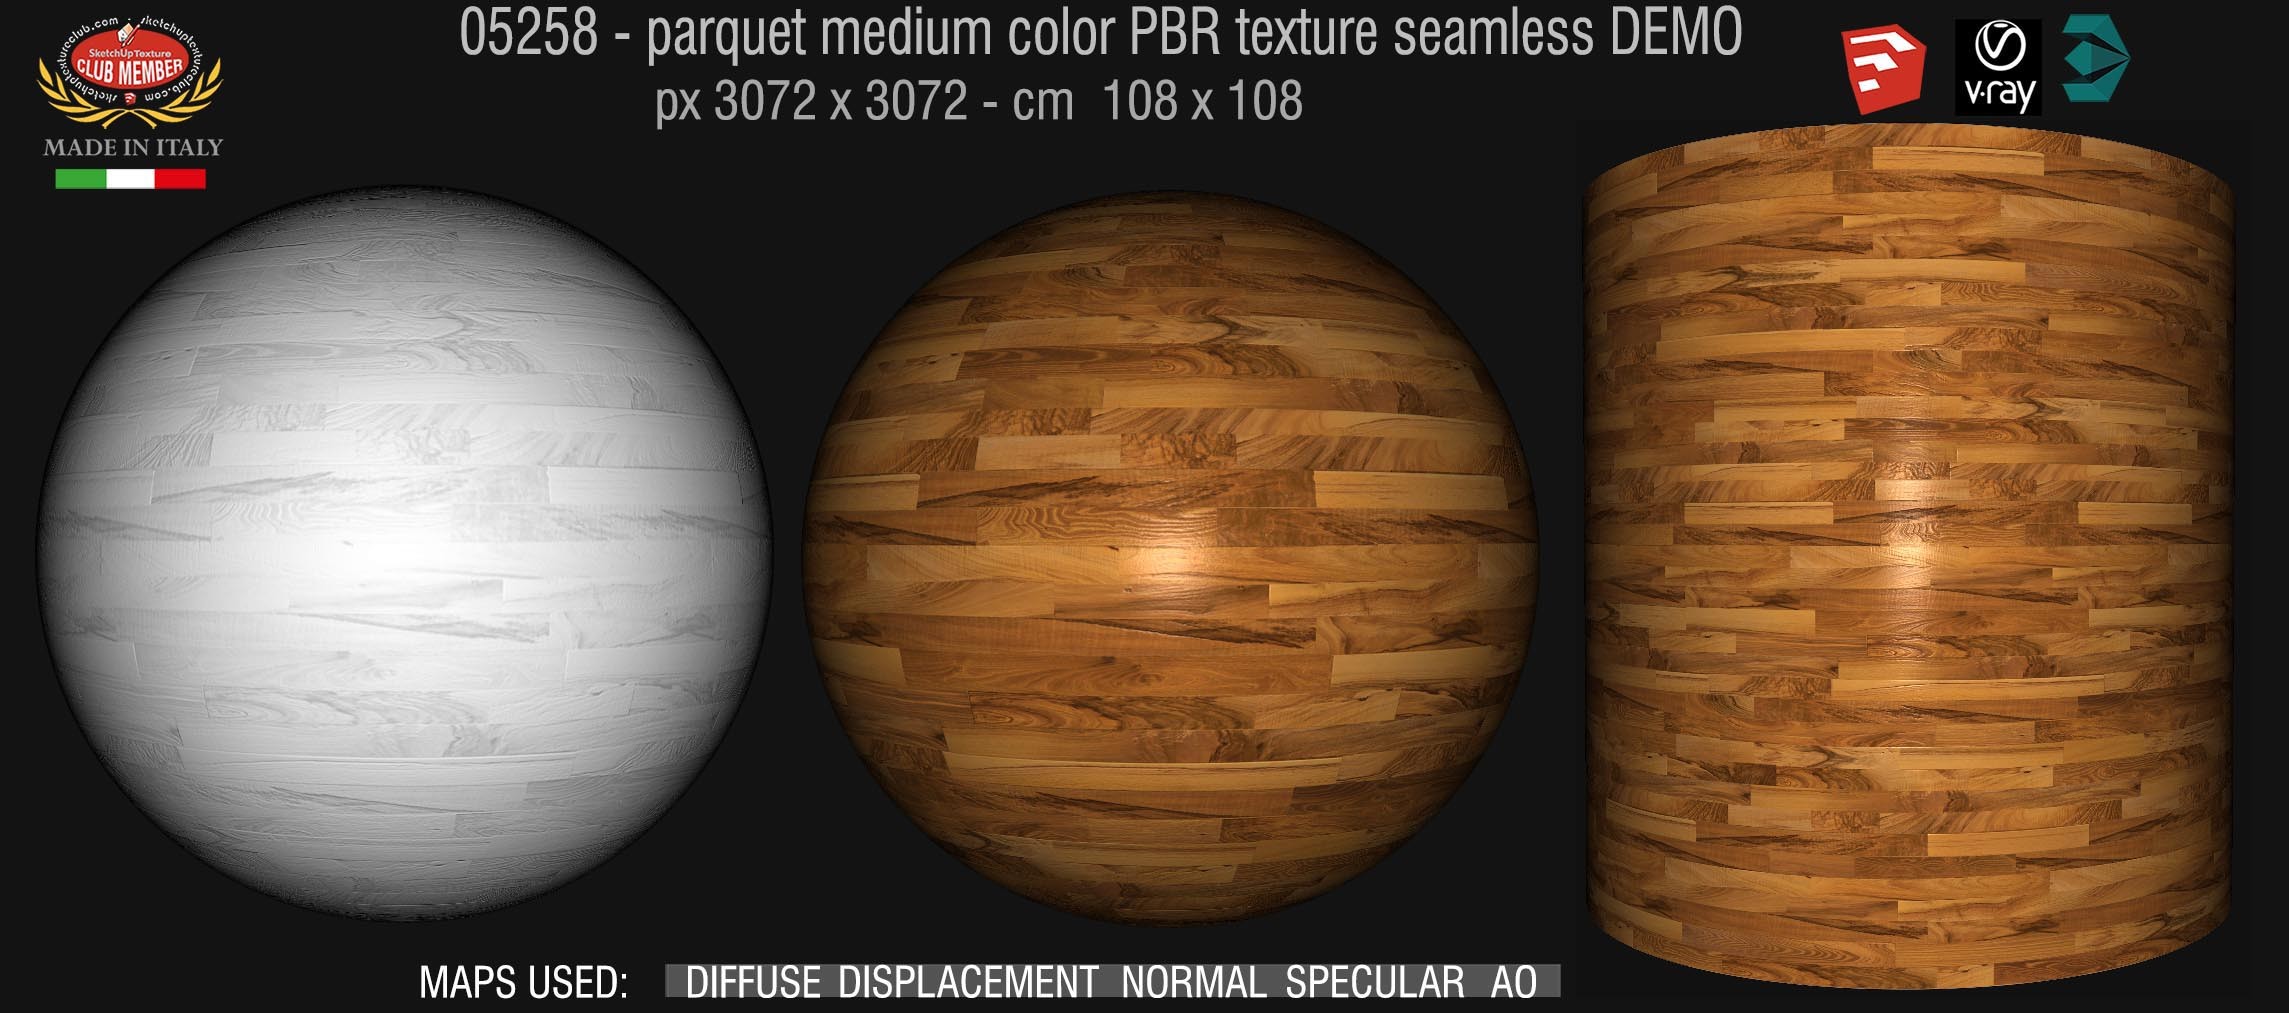 05258 parquet medium color PBR texture seamless DEMO